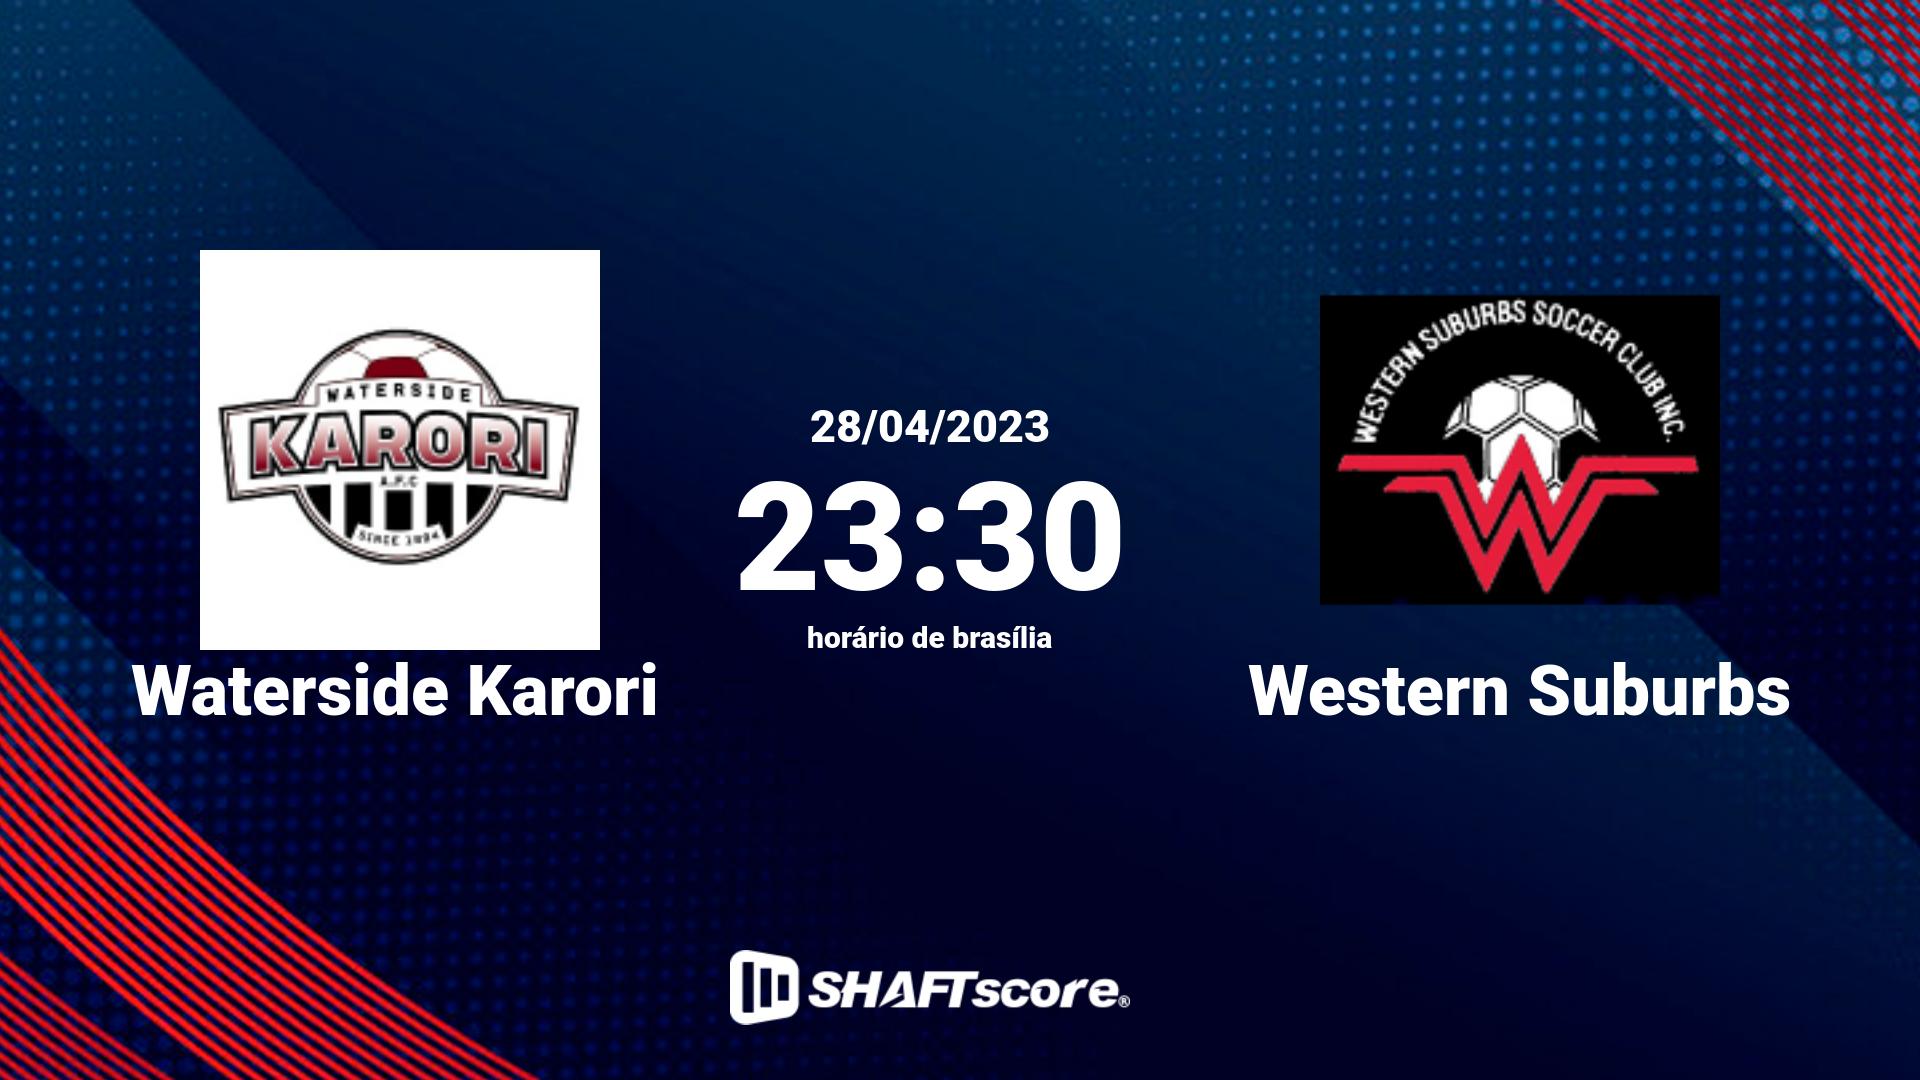 Estatísticas do jogo Waterside Karori vs Western Suburbs 28.04 23:30